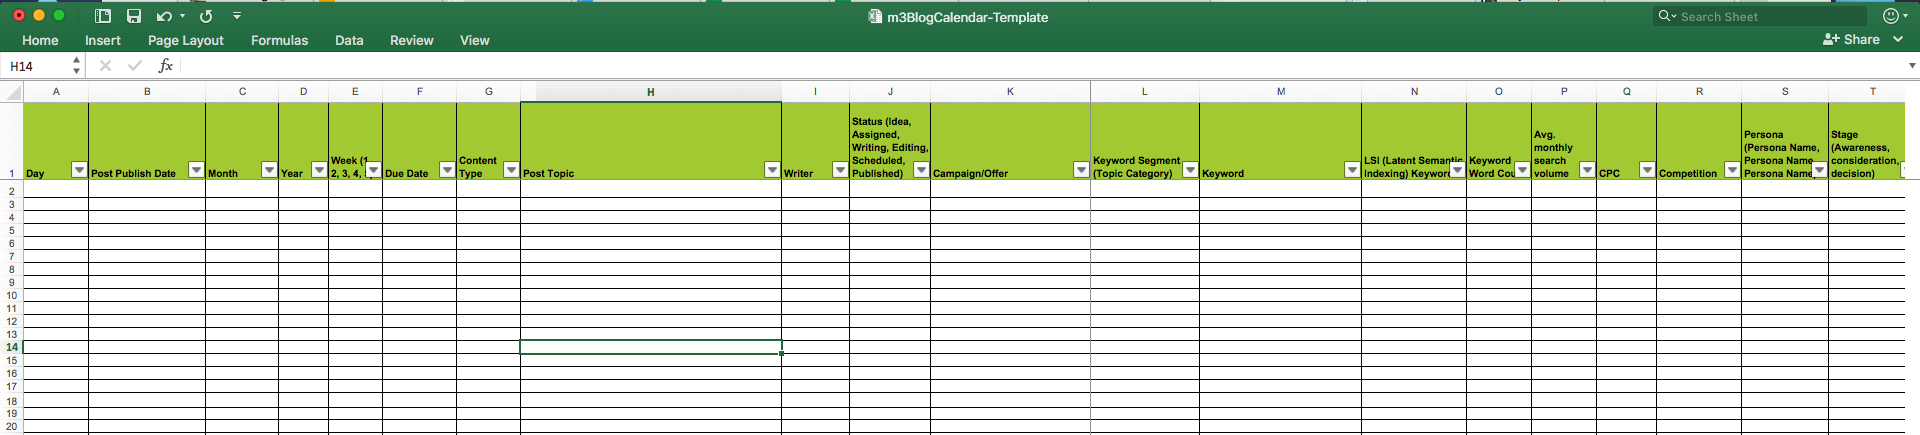 Editorial Calendar Spreadsheet Template In Editorial Calendar Templates For Content Marketing: The Ultimate List